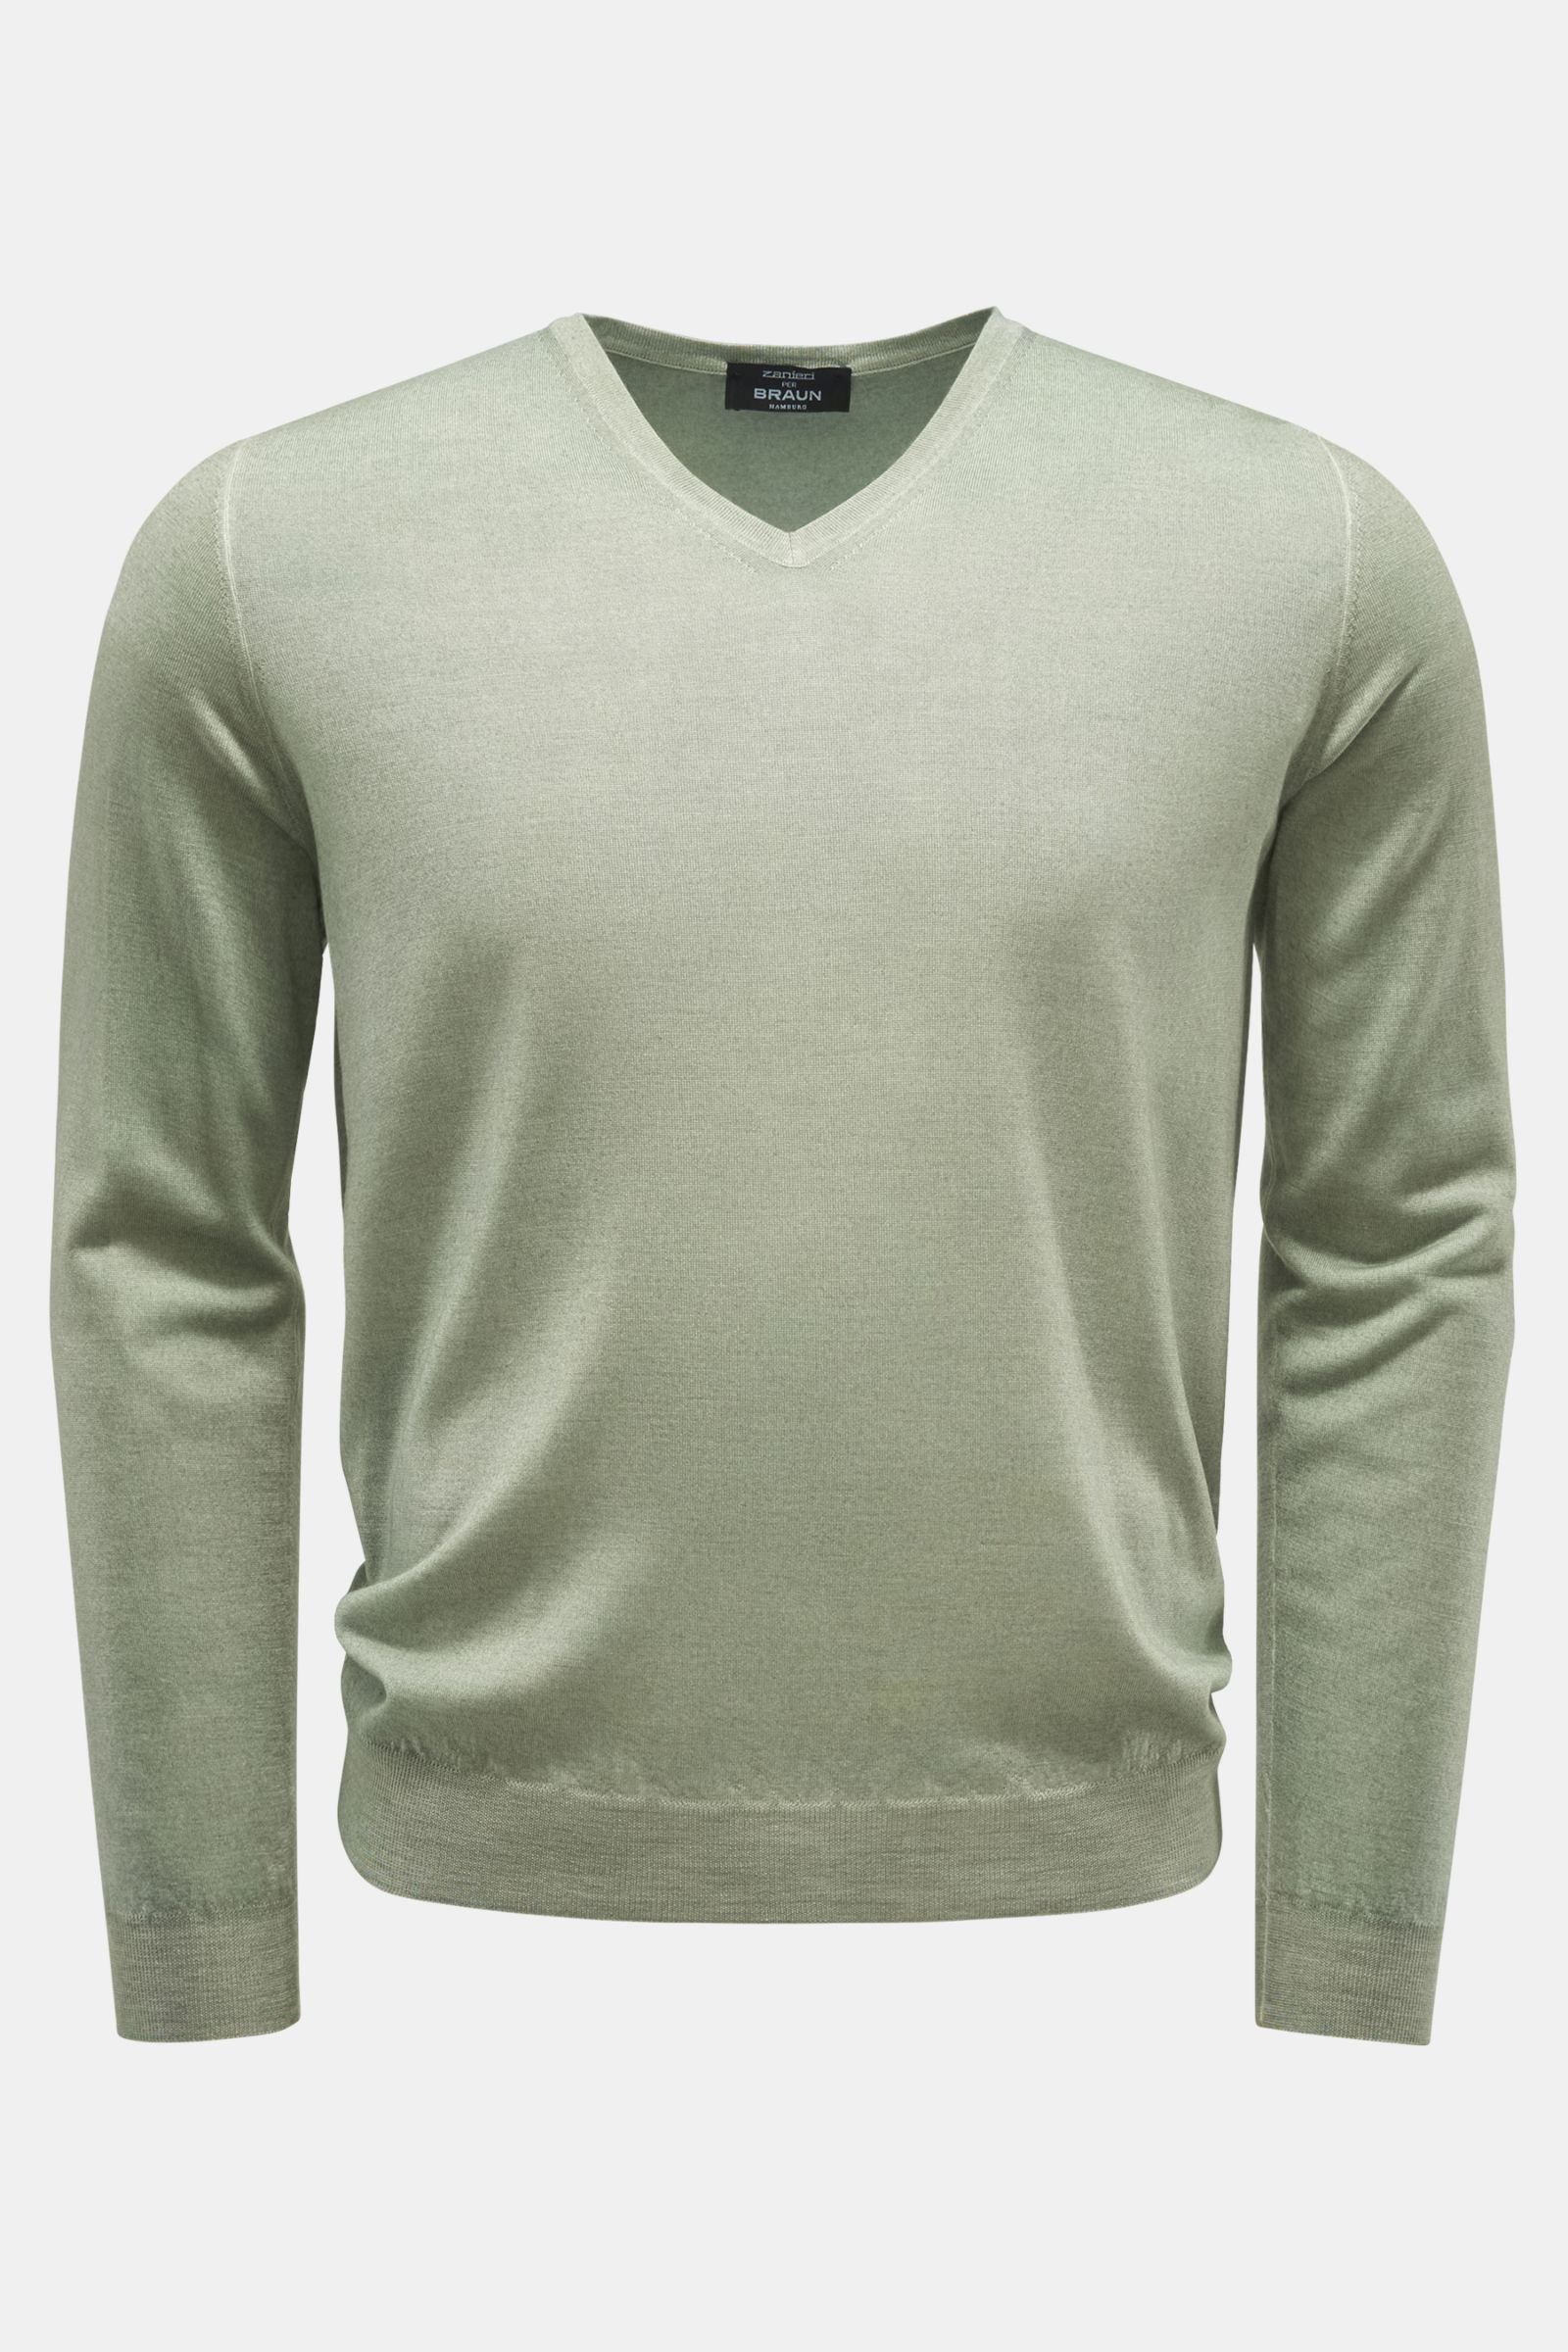 Feinstrick V-Neck Pullover graugrün